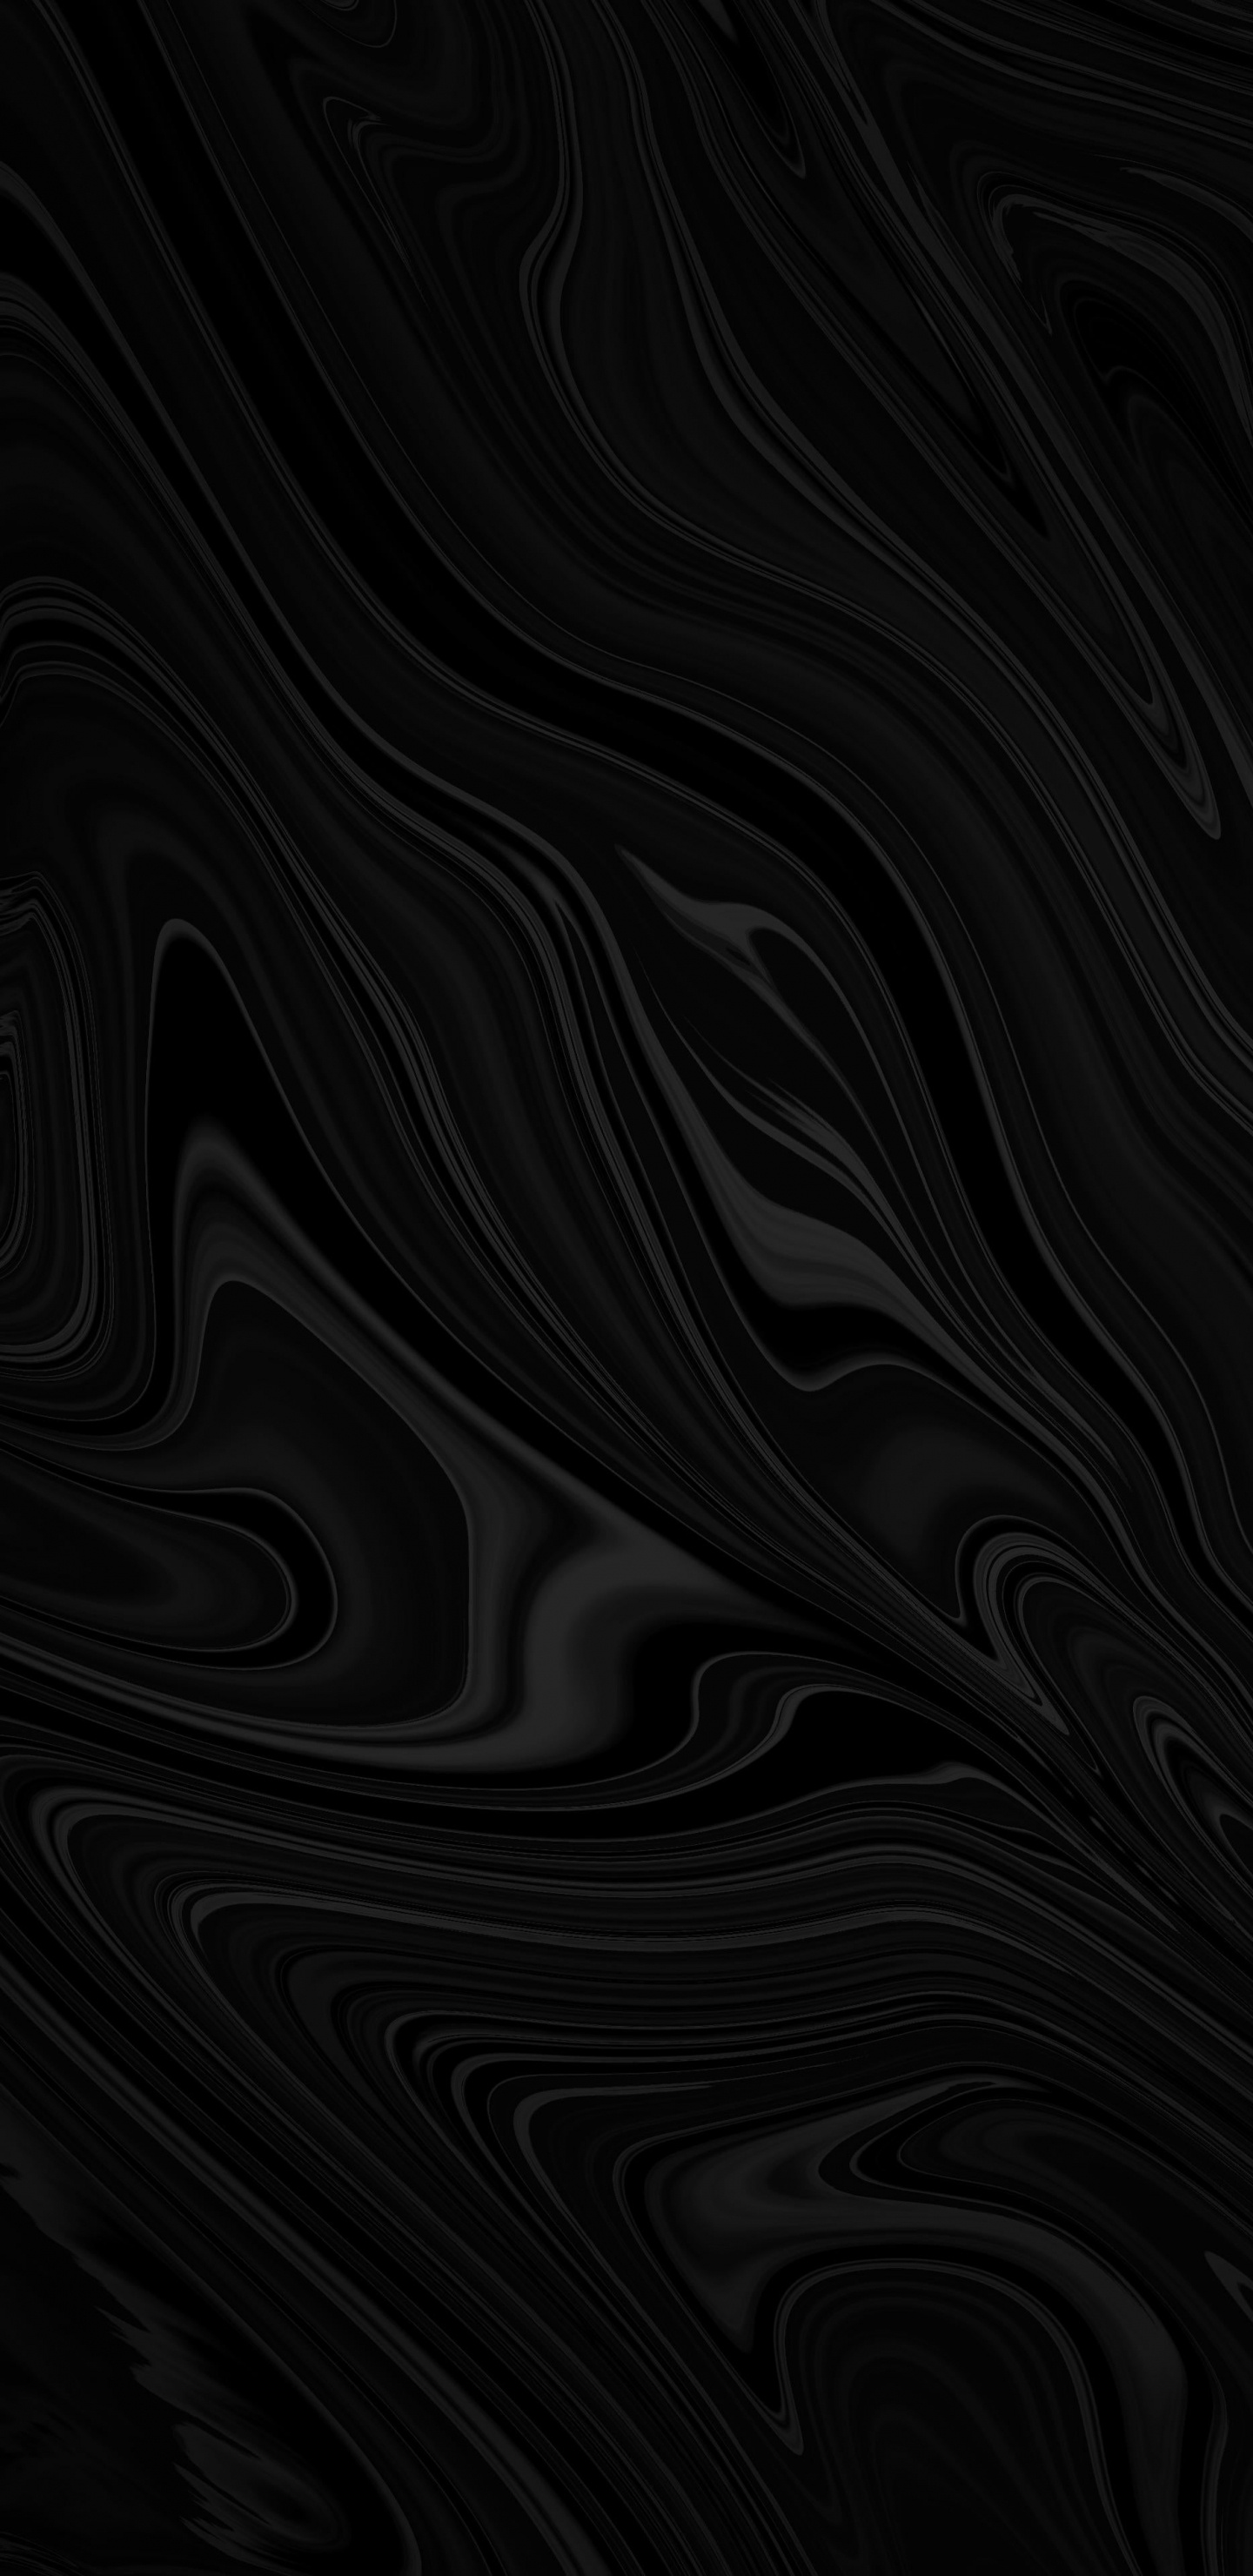 Download wallpaper 1440x2960 black pattern dark cubes abstract samsung  galaxy s8 samsung galaxy s8 plus 1440x2960 hd background 19060